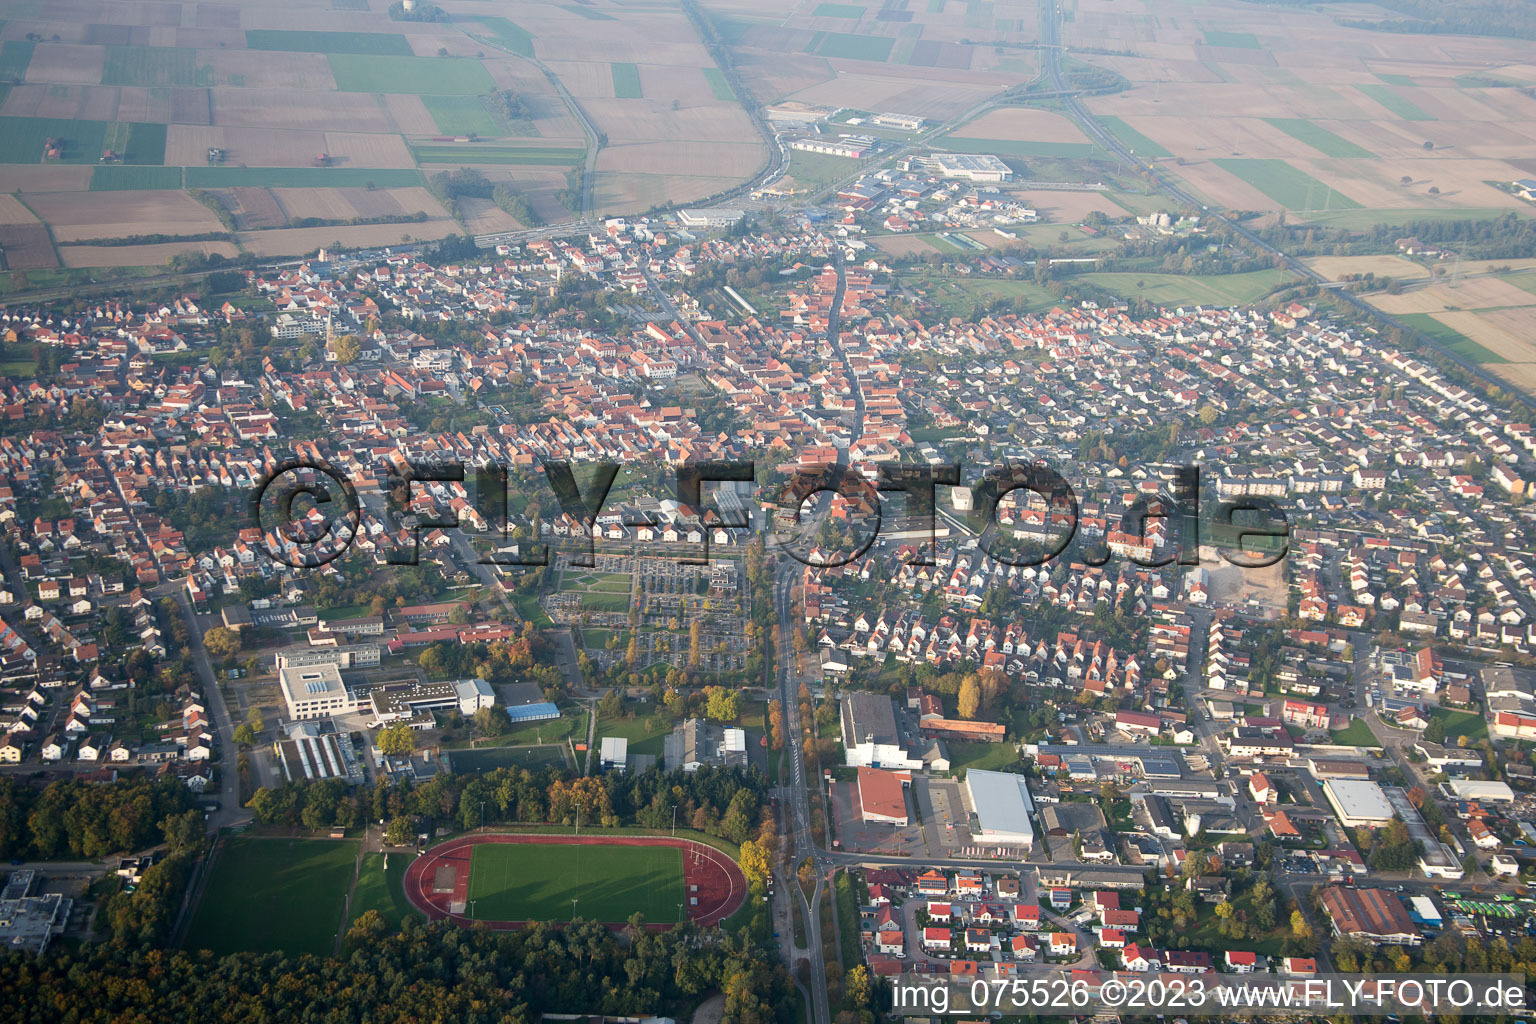 Bird's eye view of Rülzheim in the state Rhineland-Palatinate, Germany